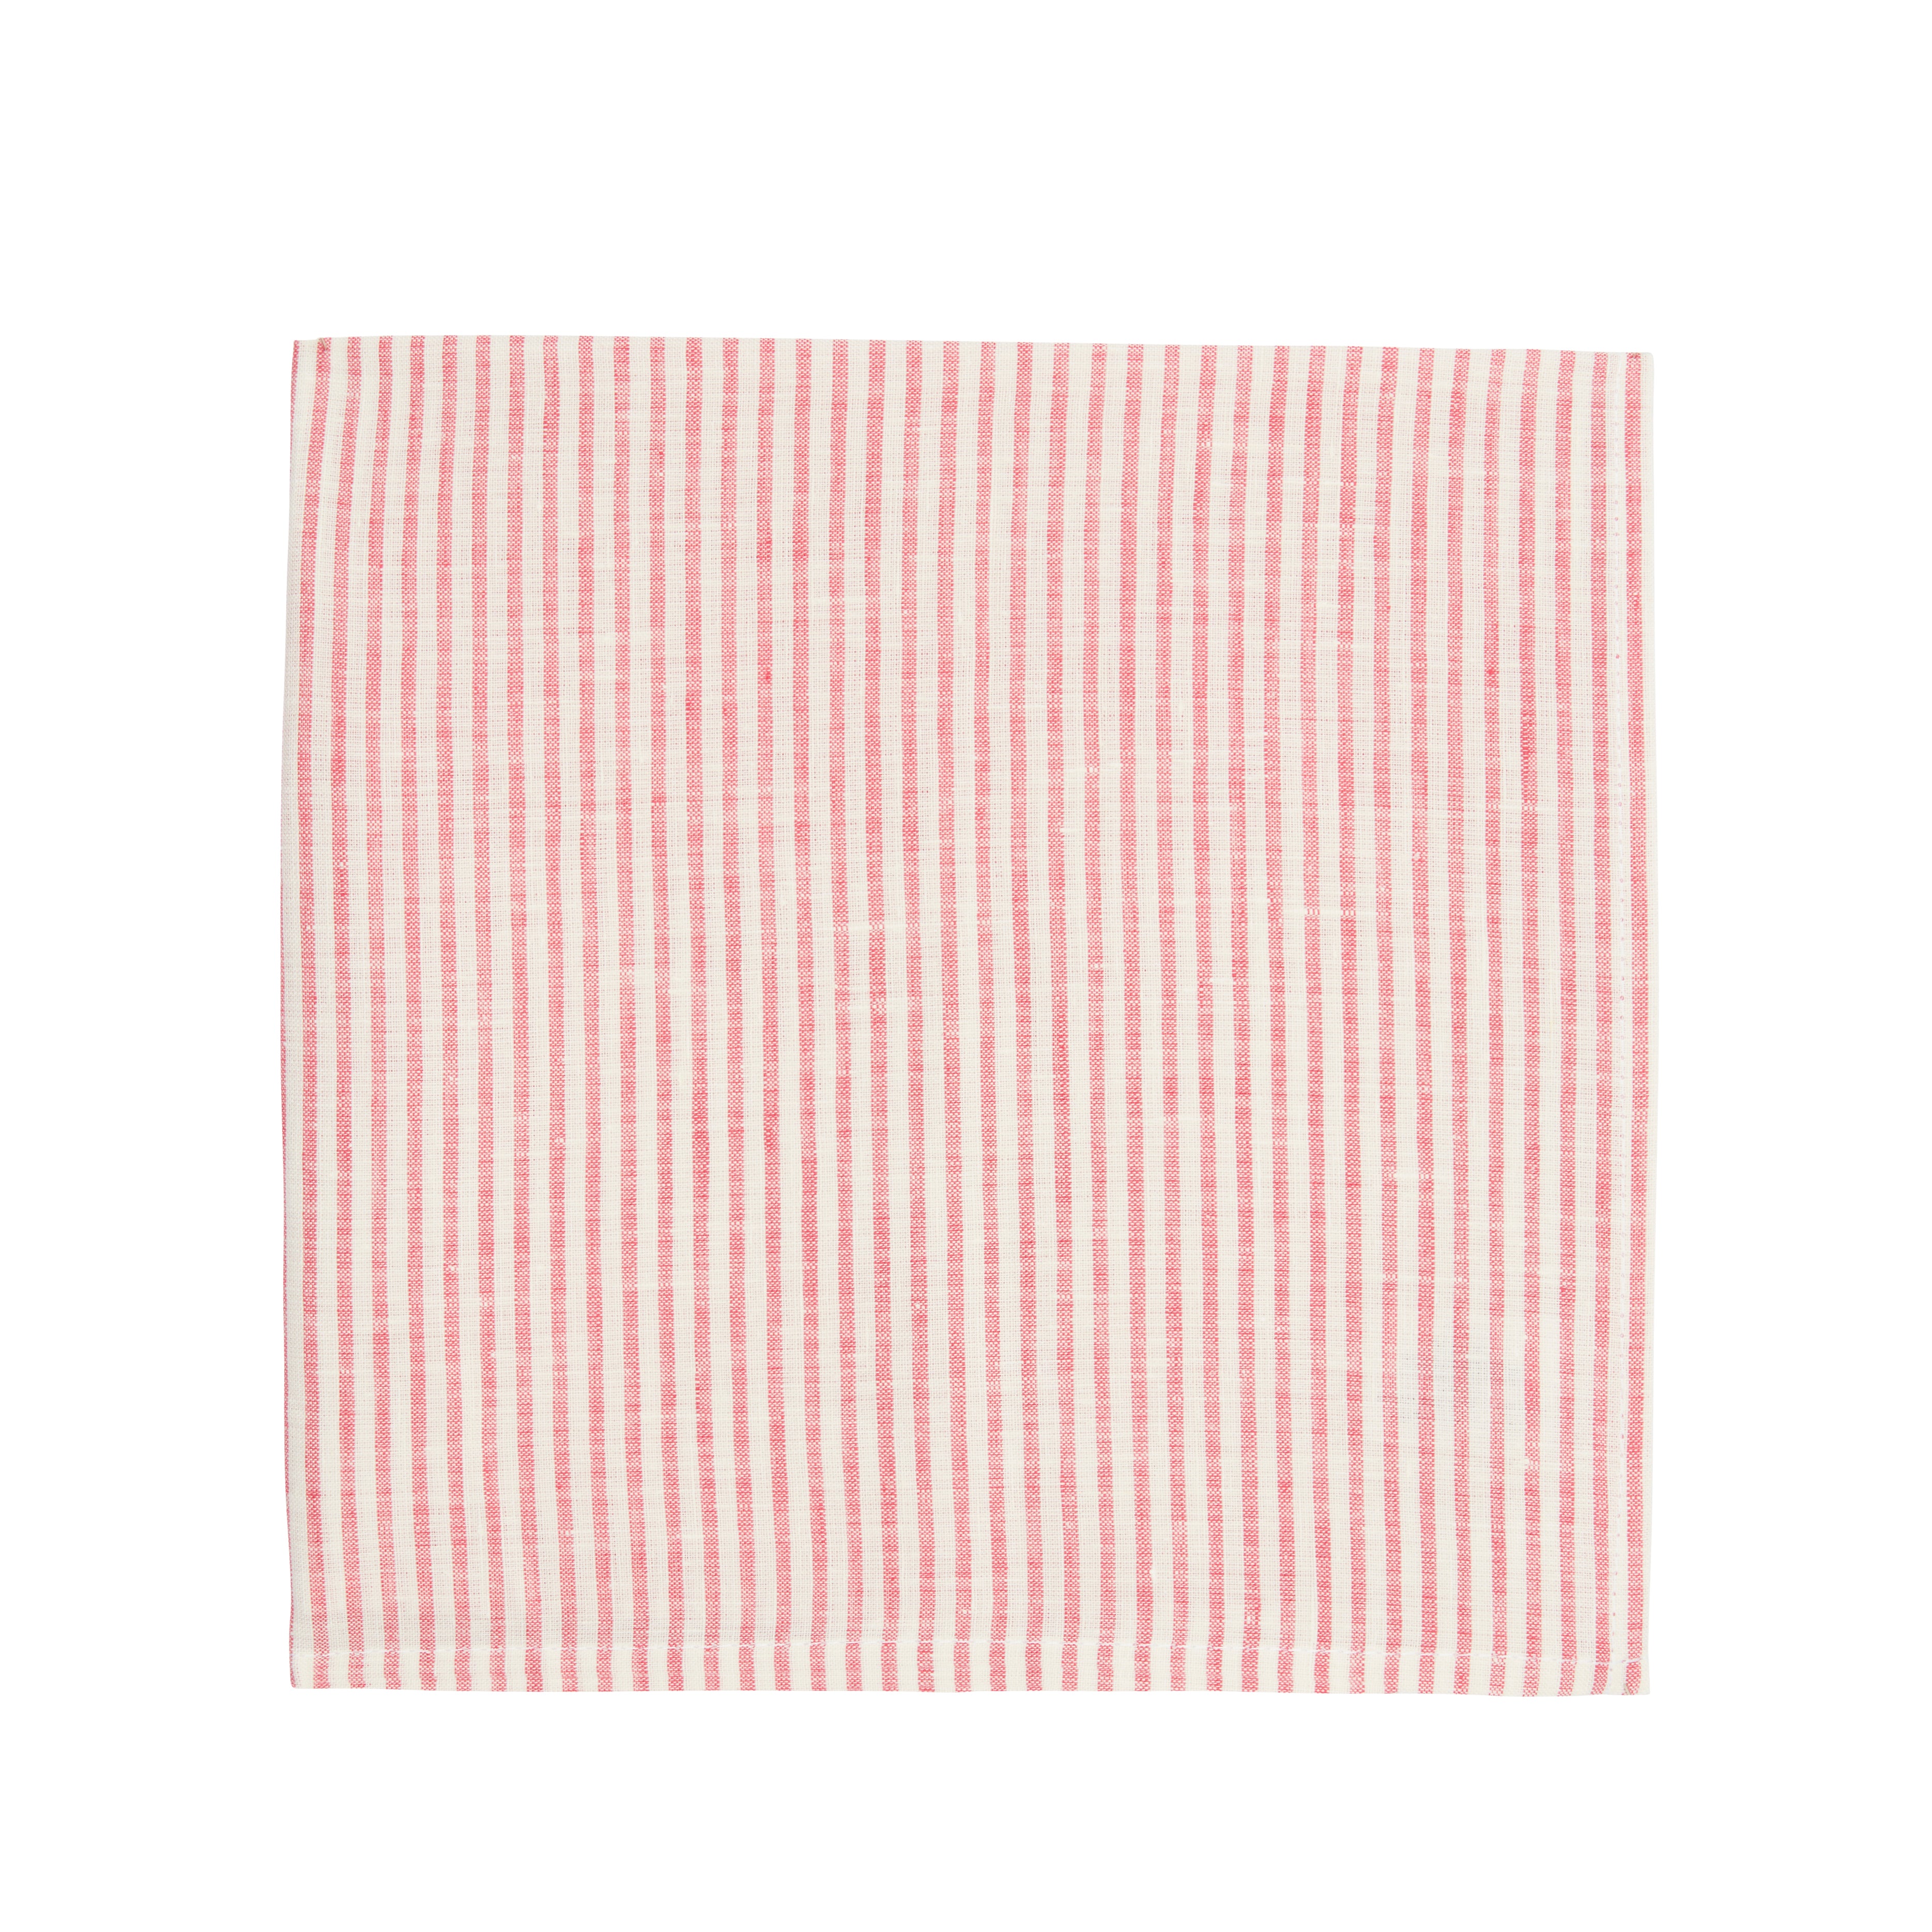 Napkin Stripe 54cm x 54cm - Pink and White